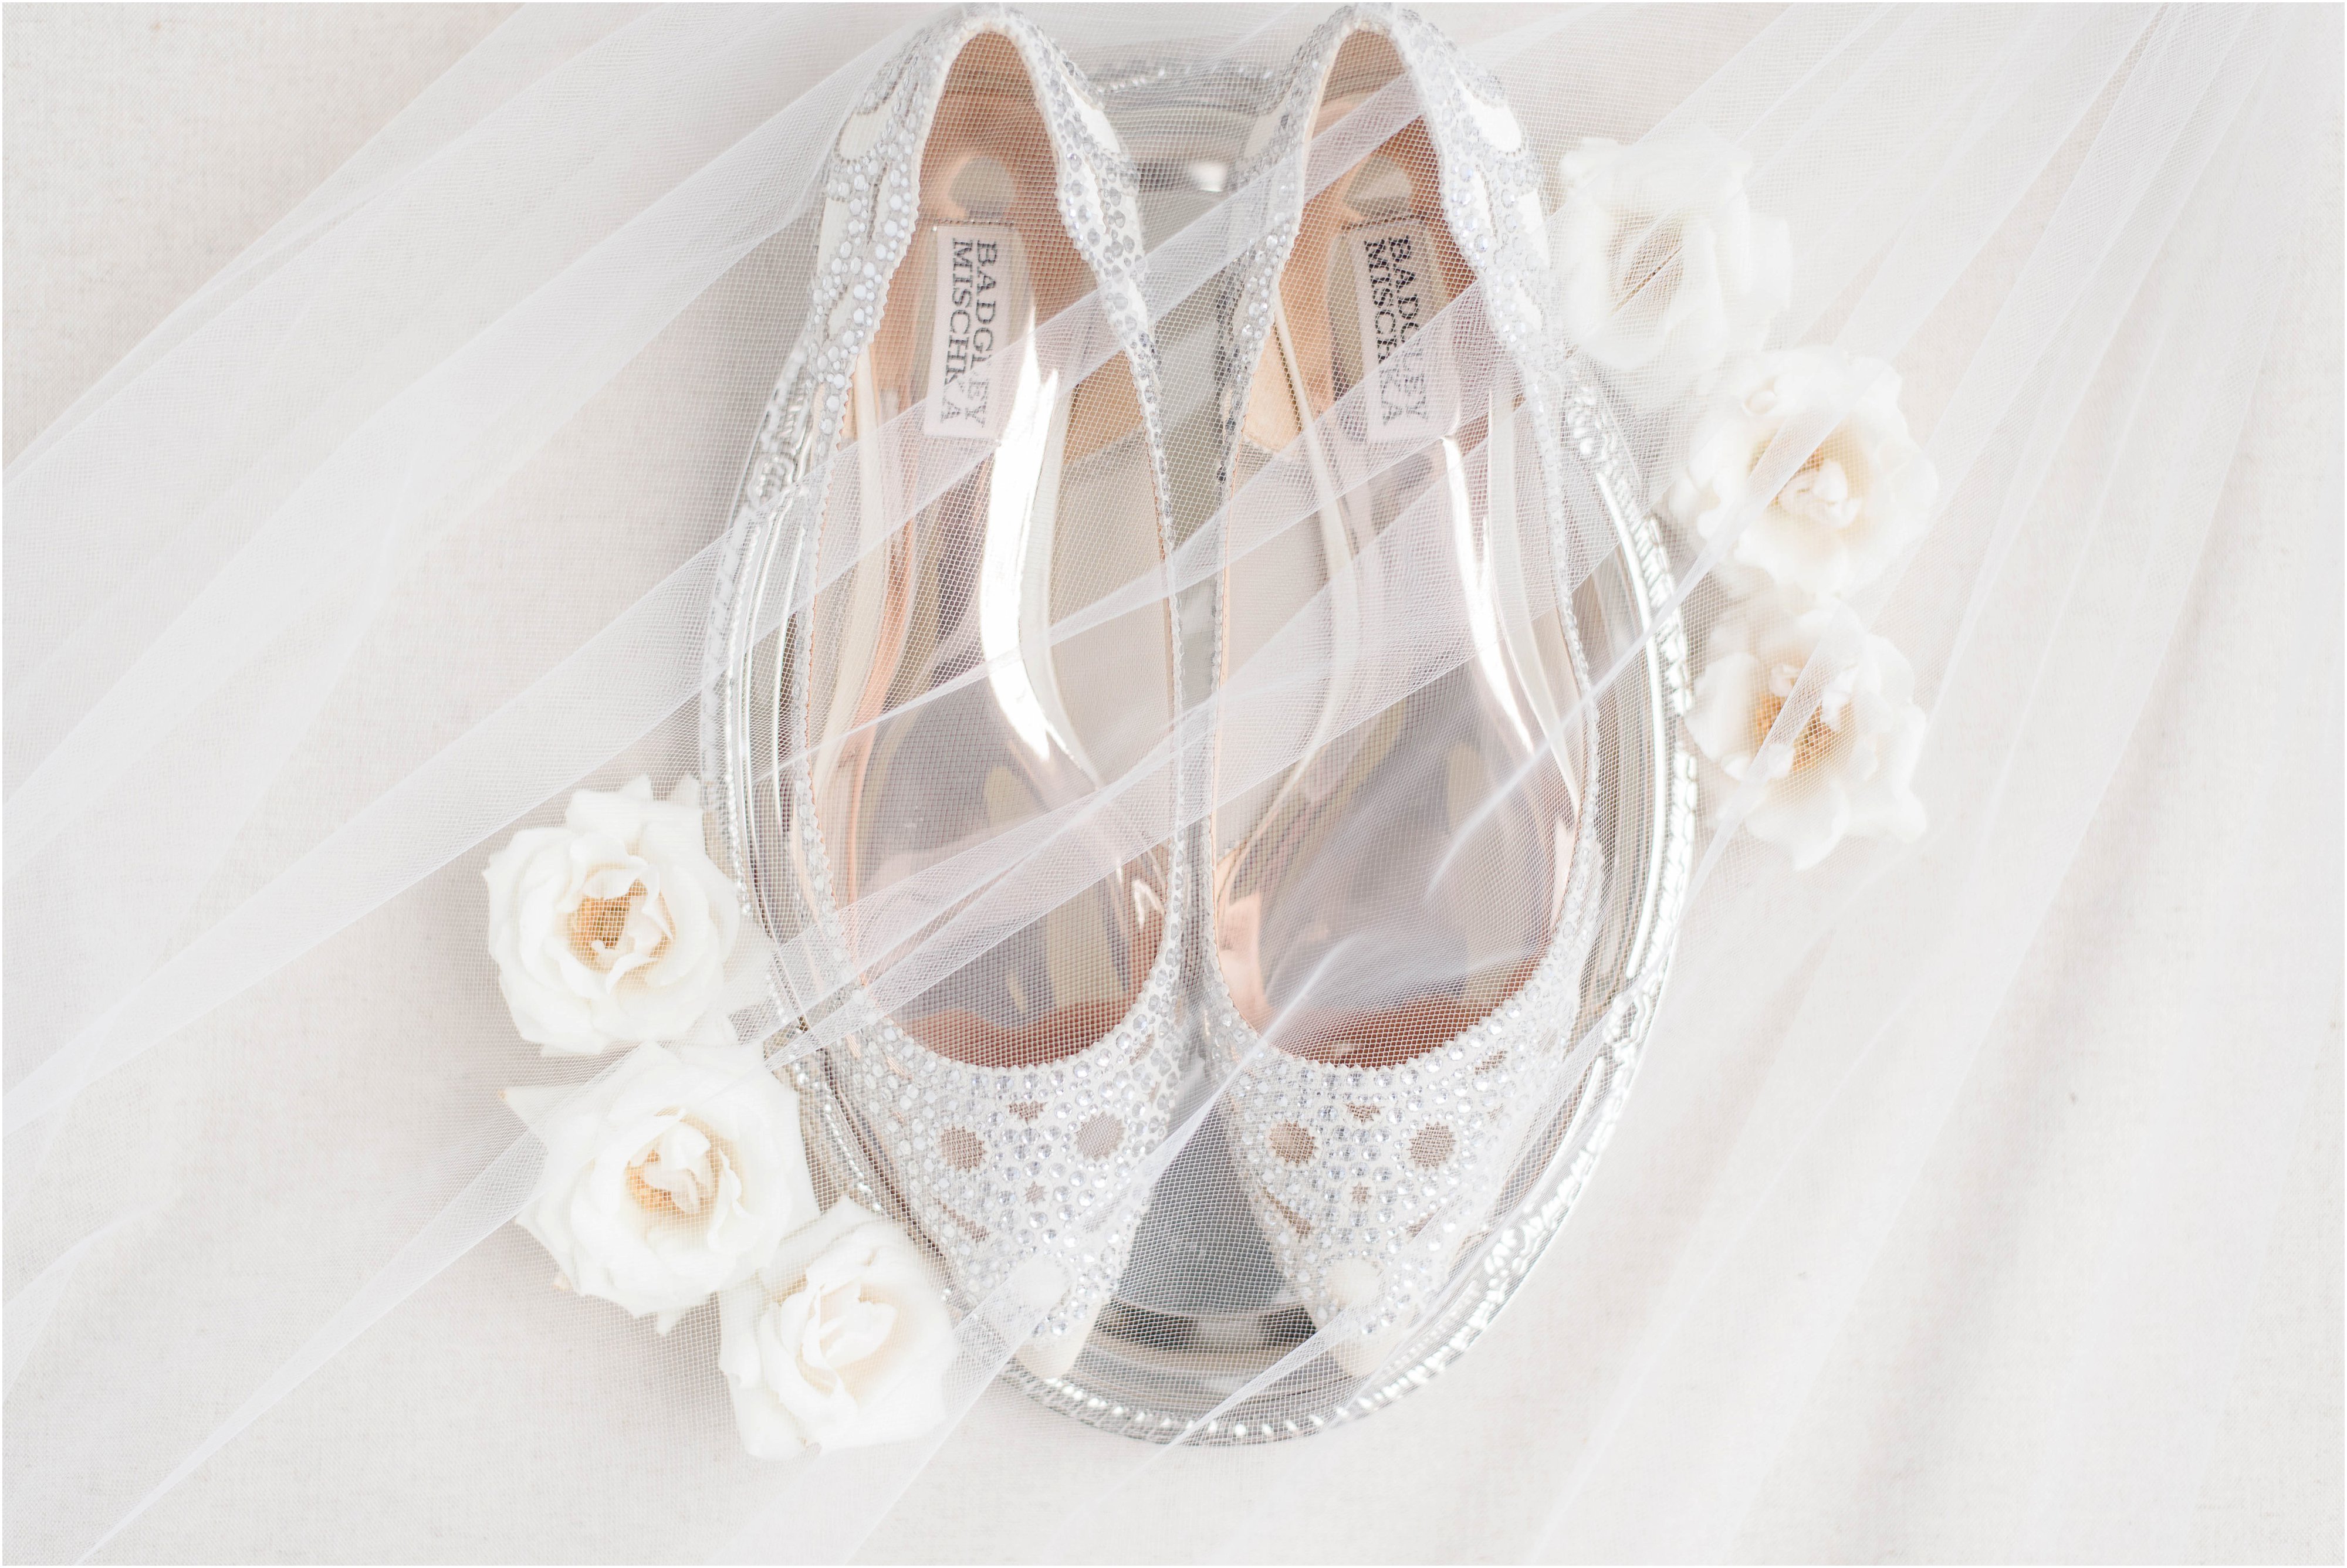 pittsburgh wedding shoes